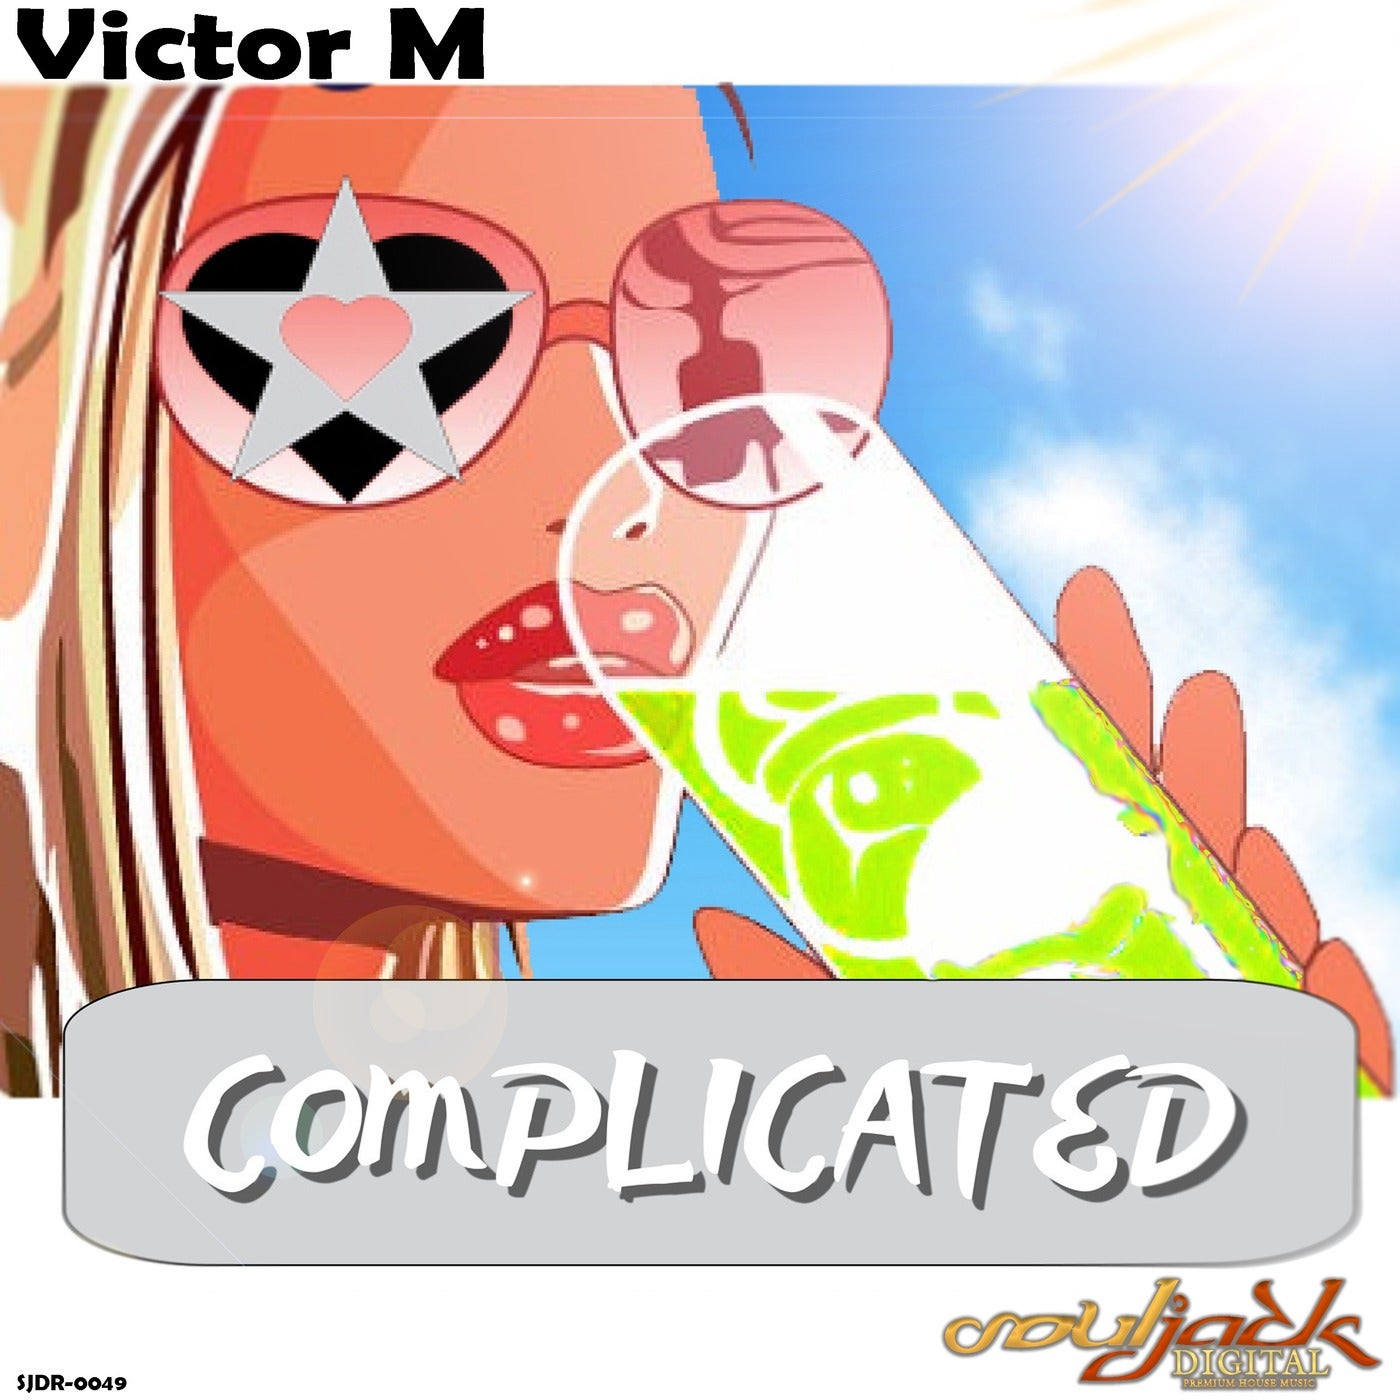 Victor M - Complicated [SJDR0049]